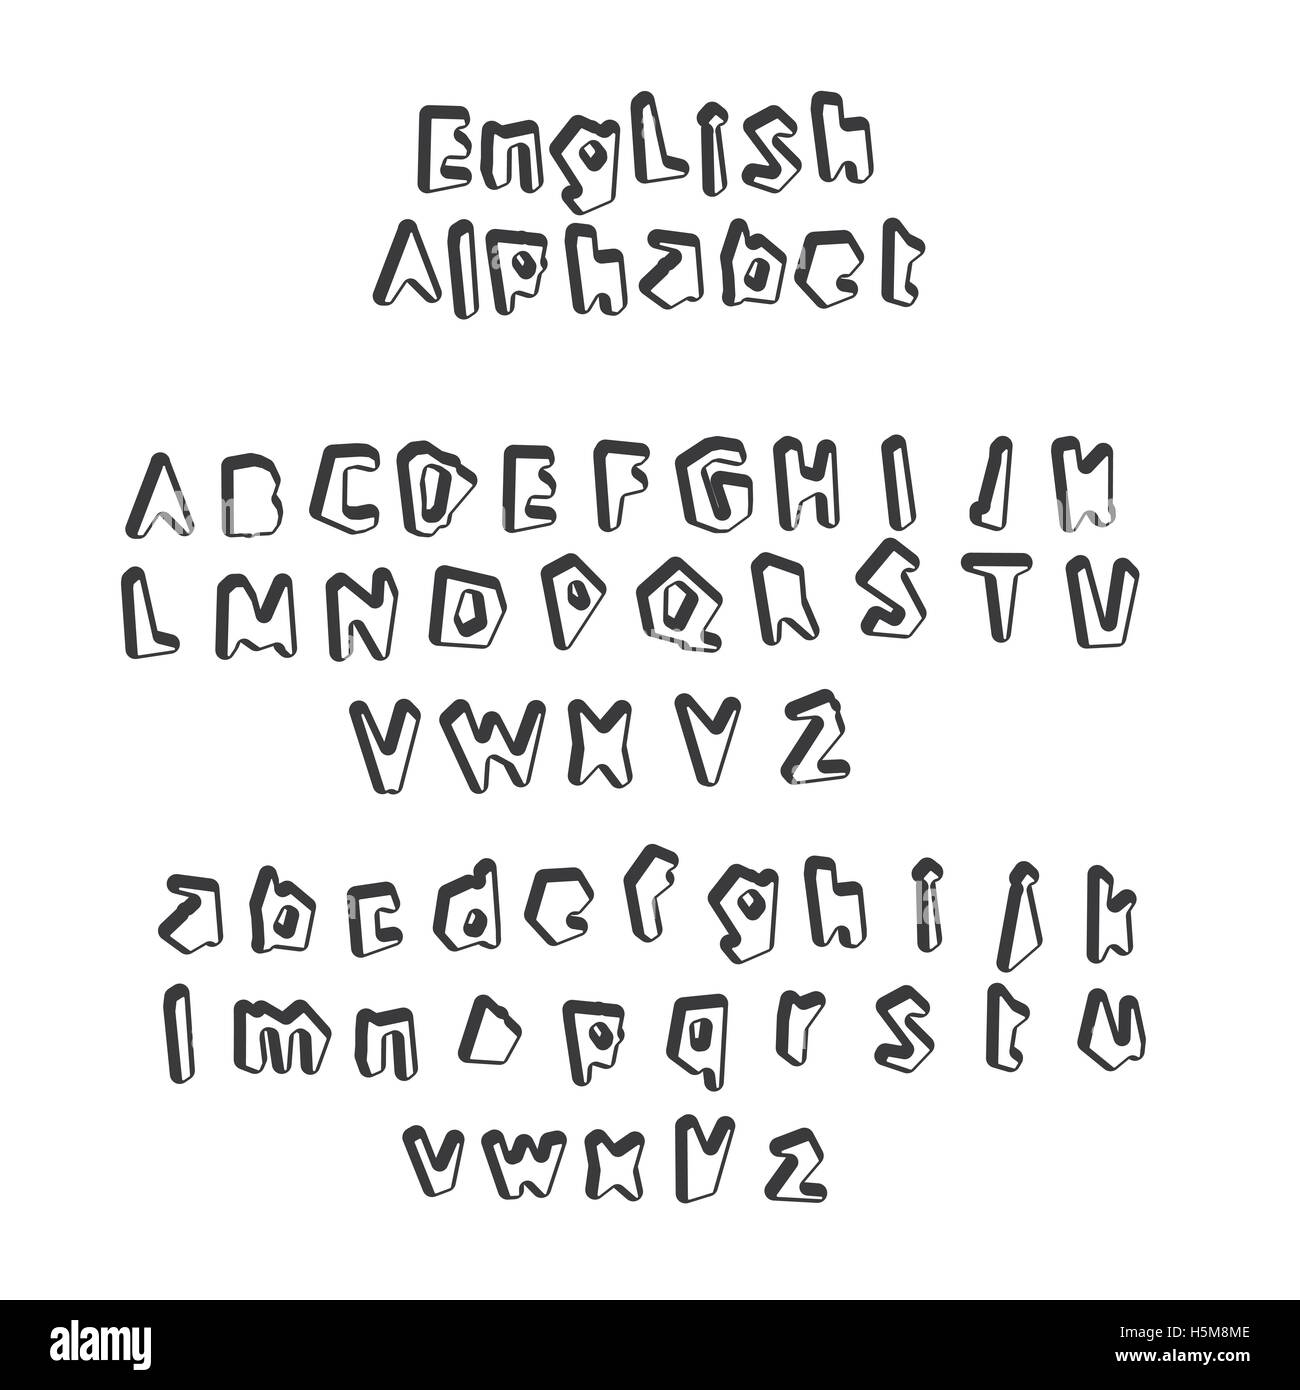 English Alphabet letters set vector illustration Stock Vector